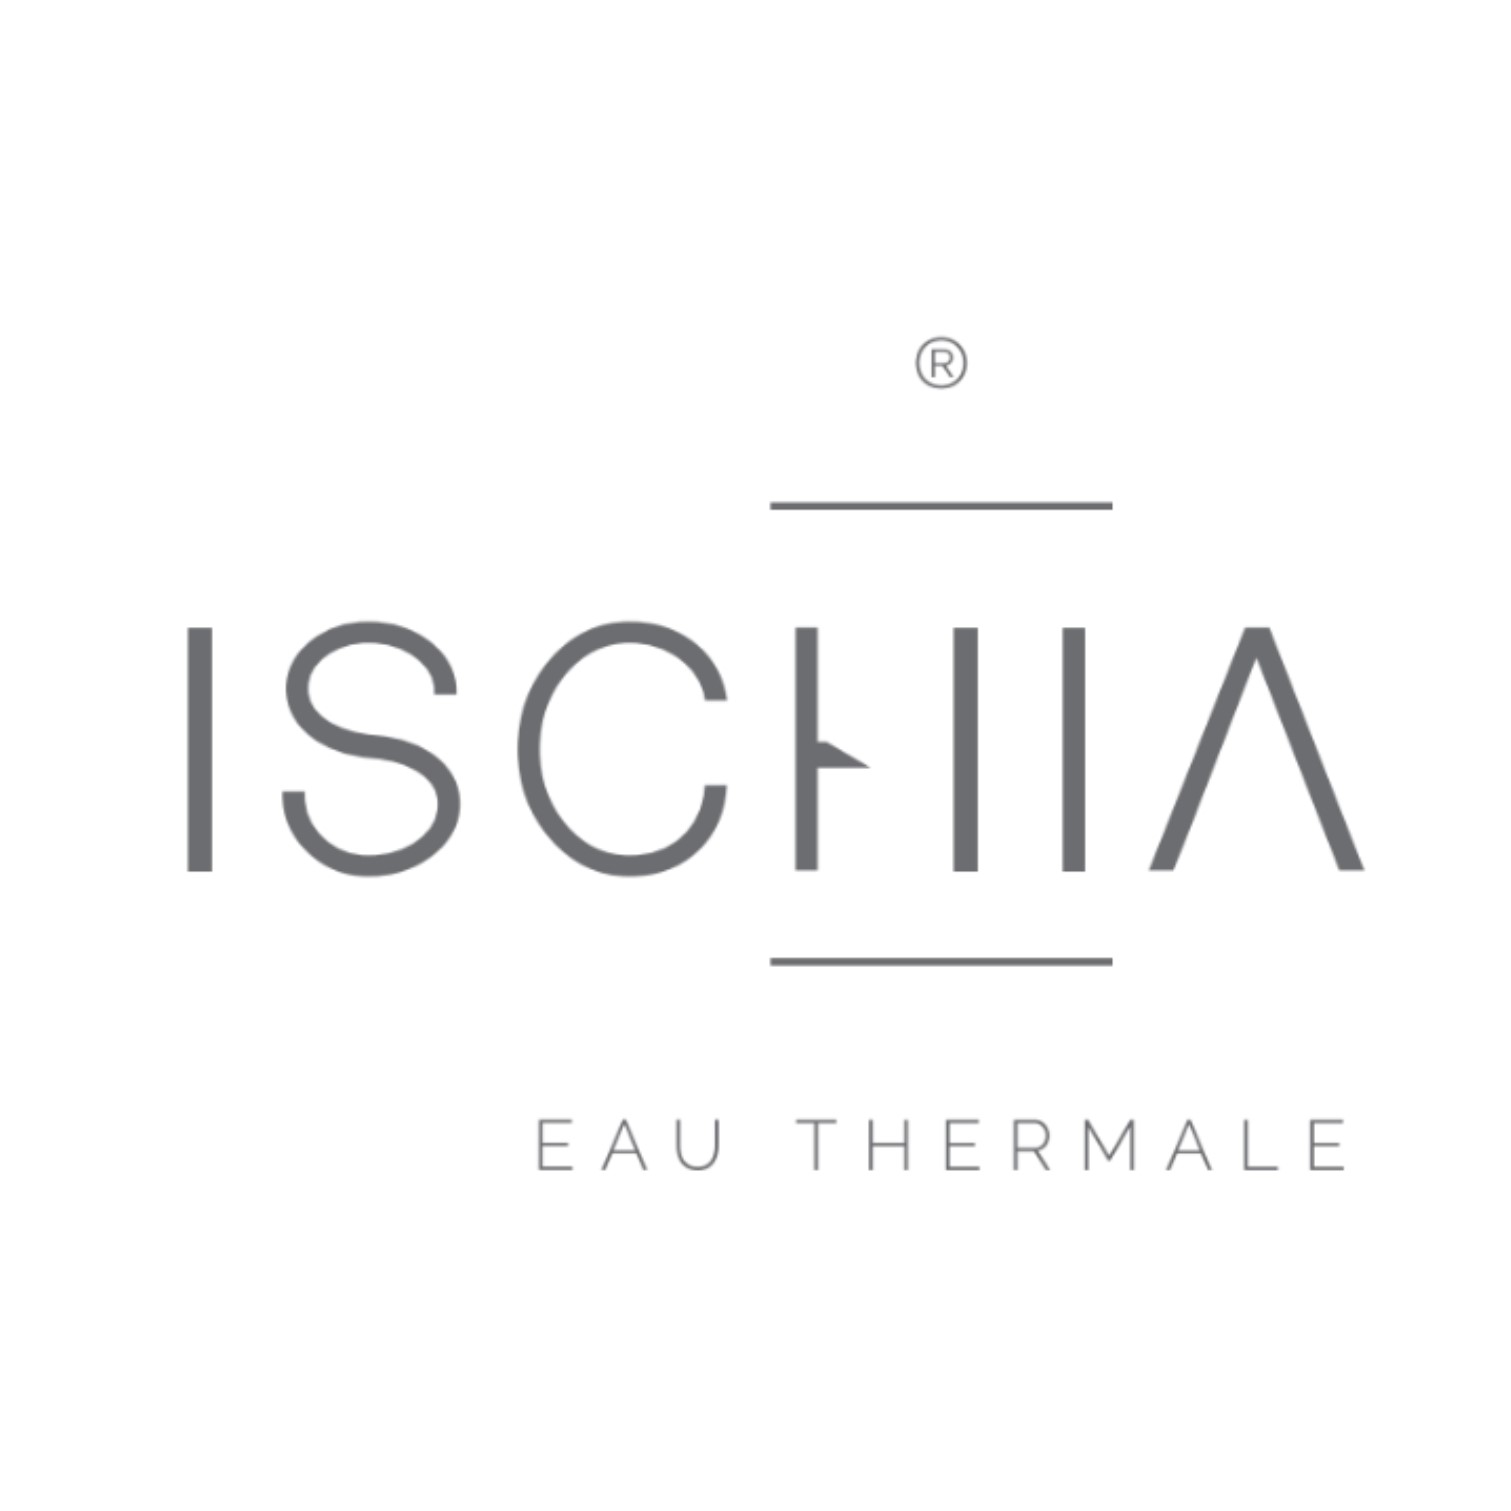 Ischia eau thermale